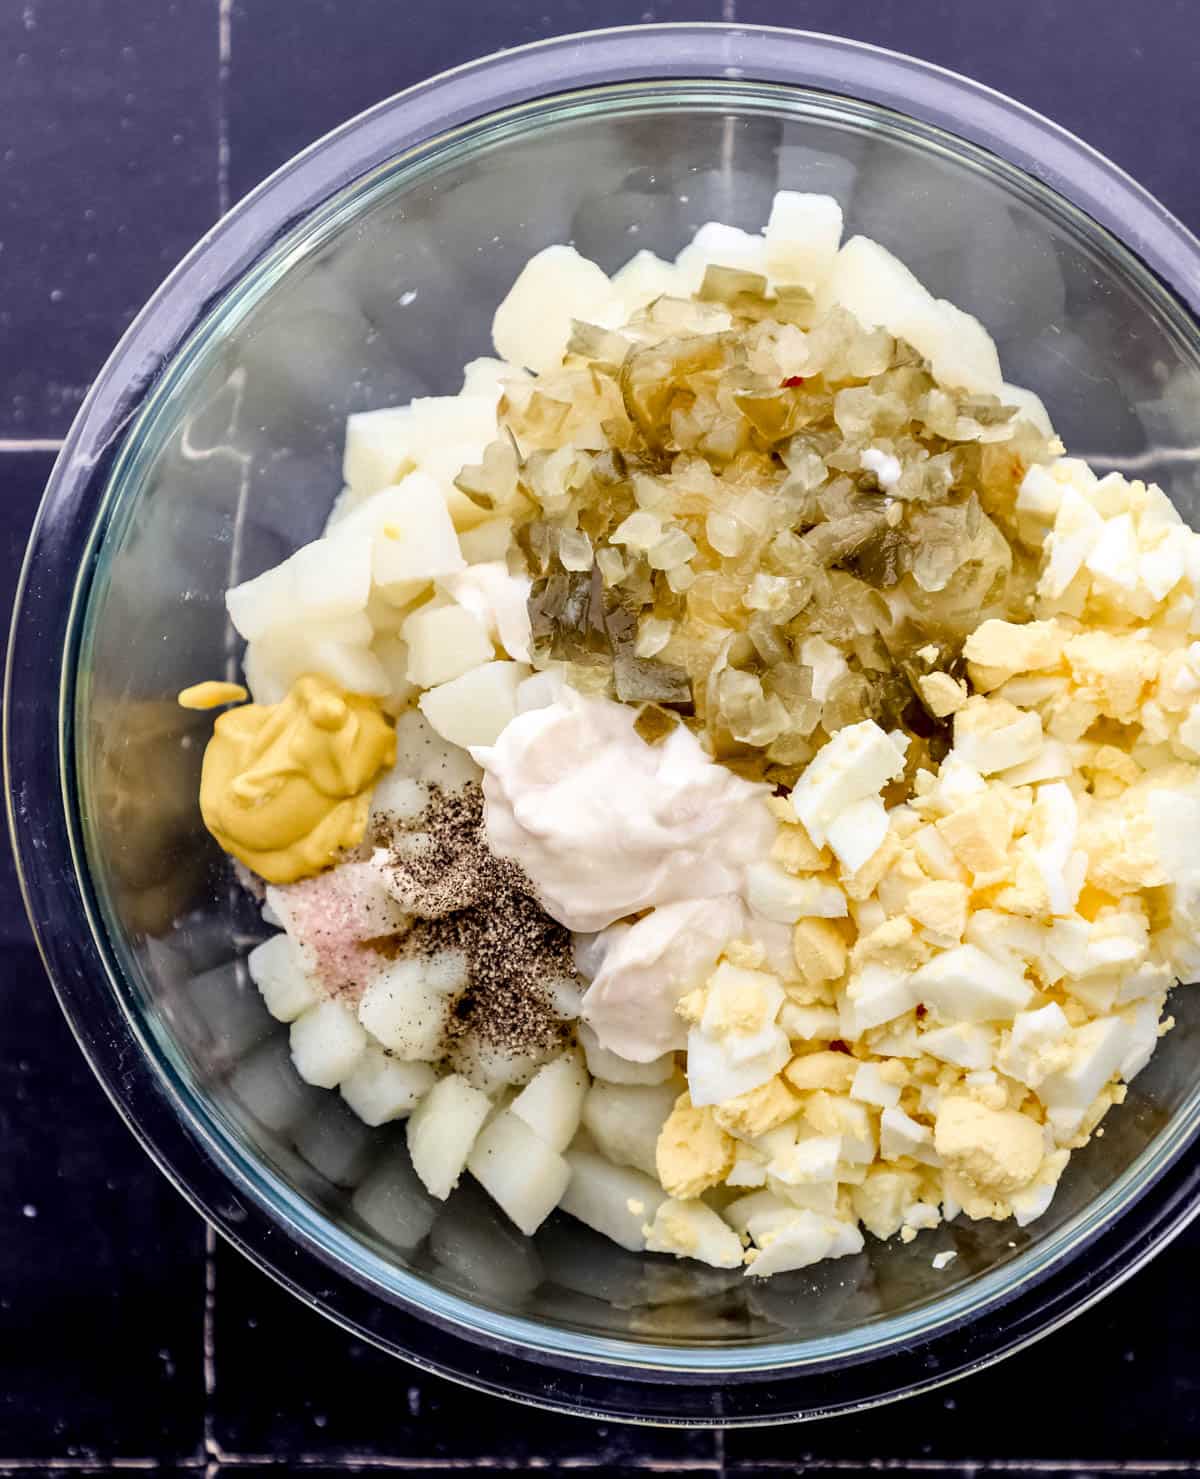 Ingredients to make potato salad added to large glass mixing bowl. 